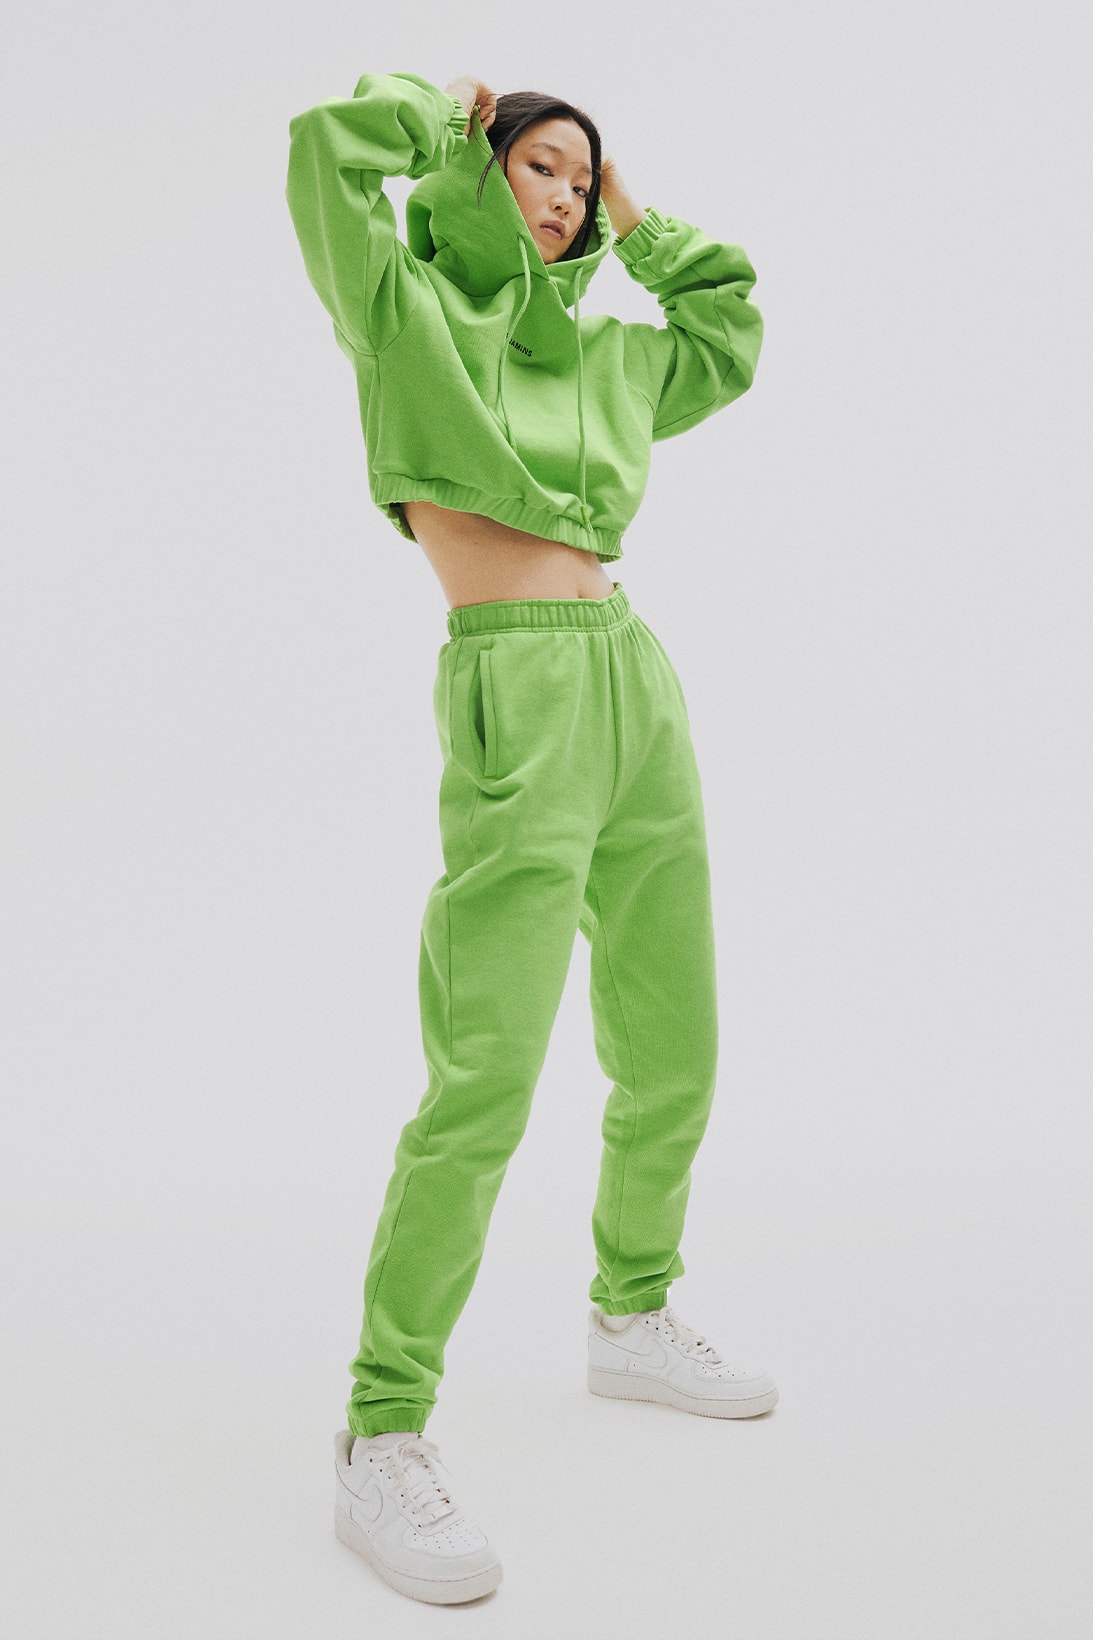 Les Benjamins "Essentials 4.0" Collection Streetwear Hoodies Sweatpants Green